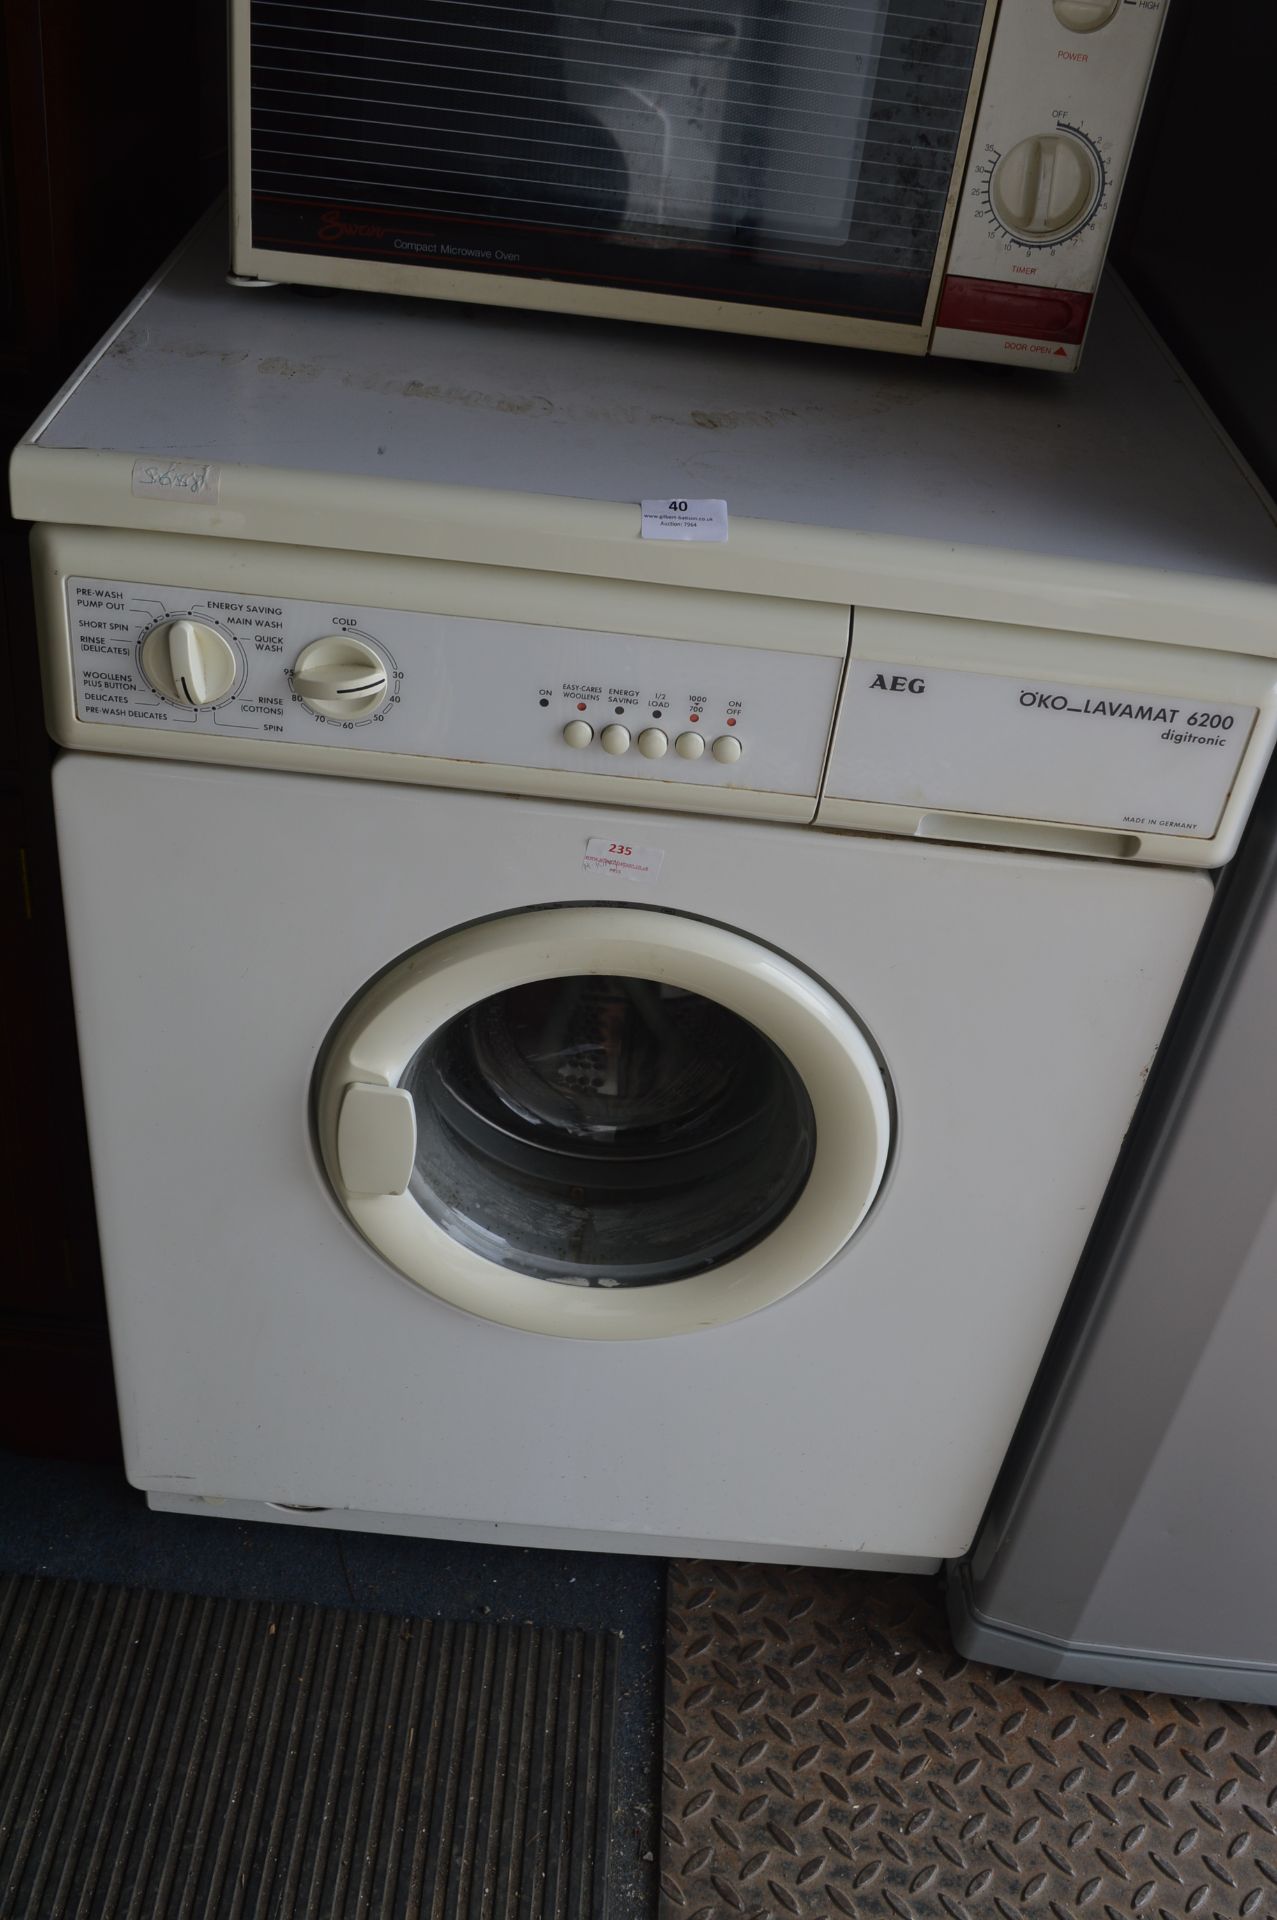 AEG Lavamat 6200 Washing Machine